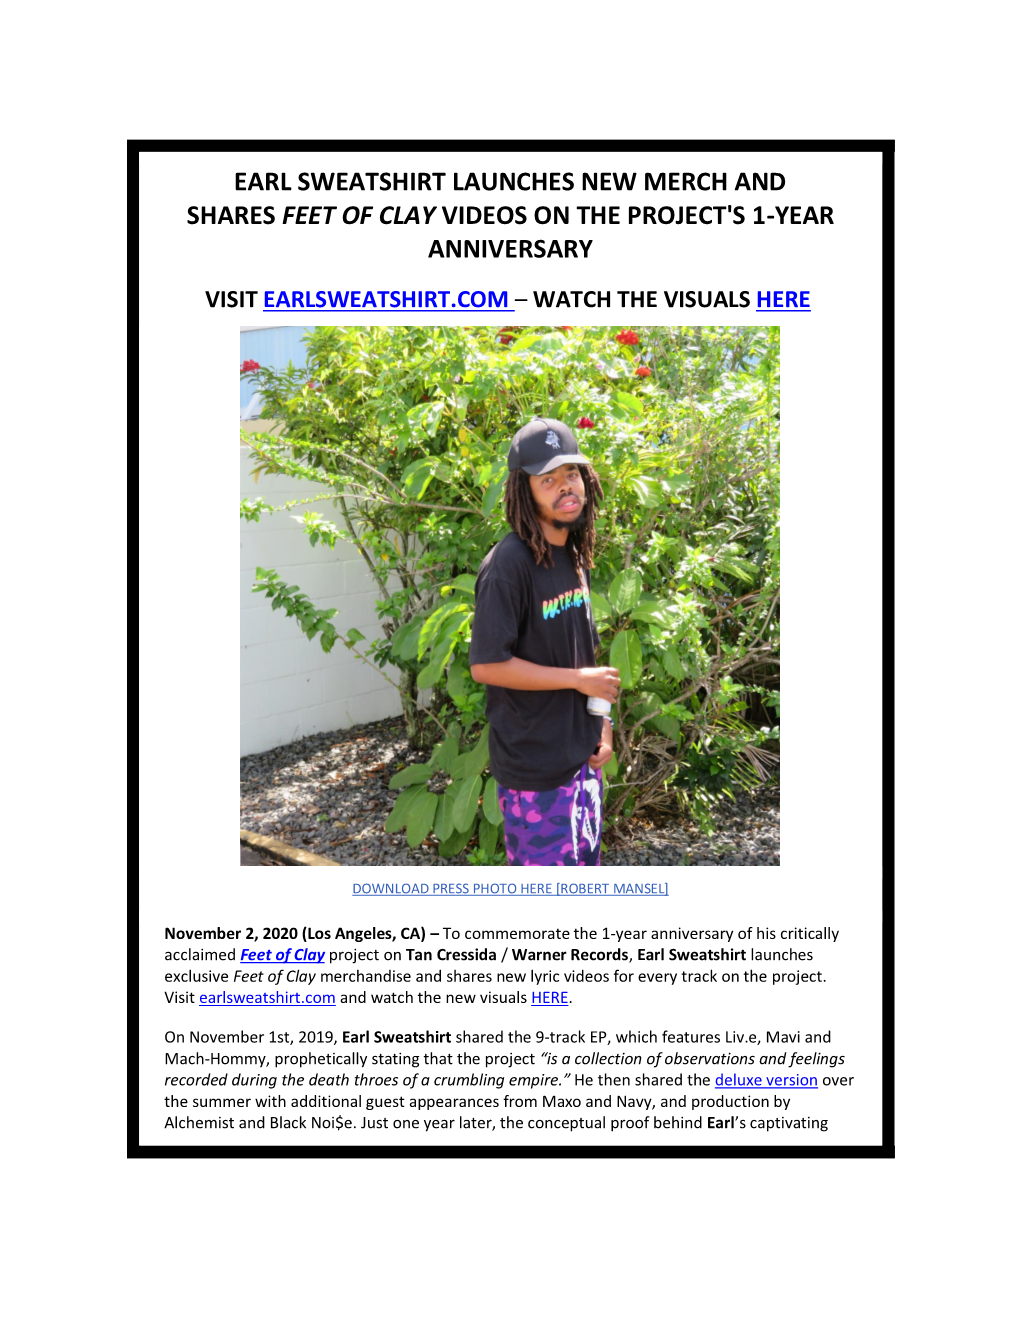 Earl Sweatshirt Launches New Merch, Shares